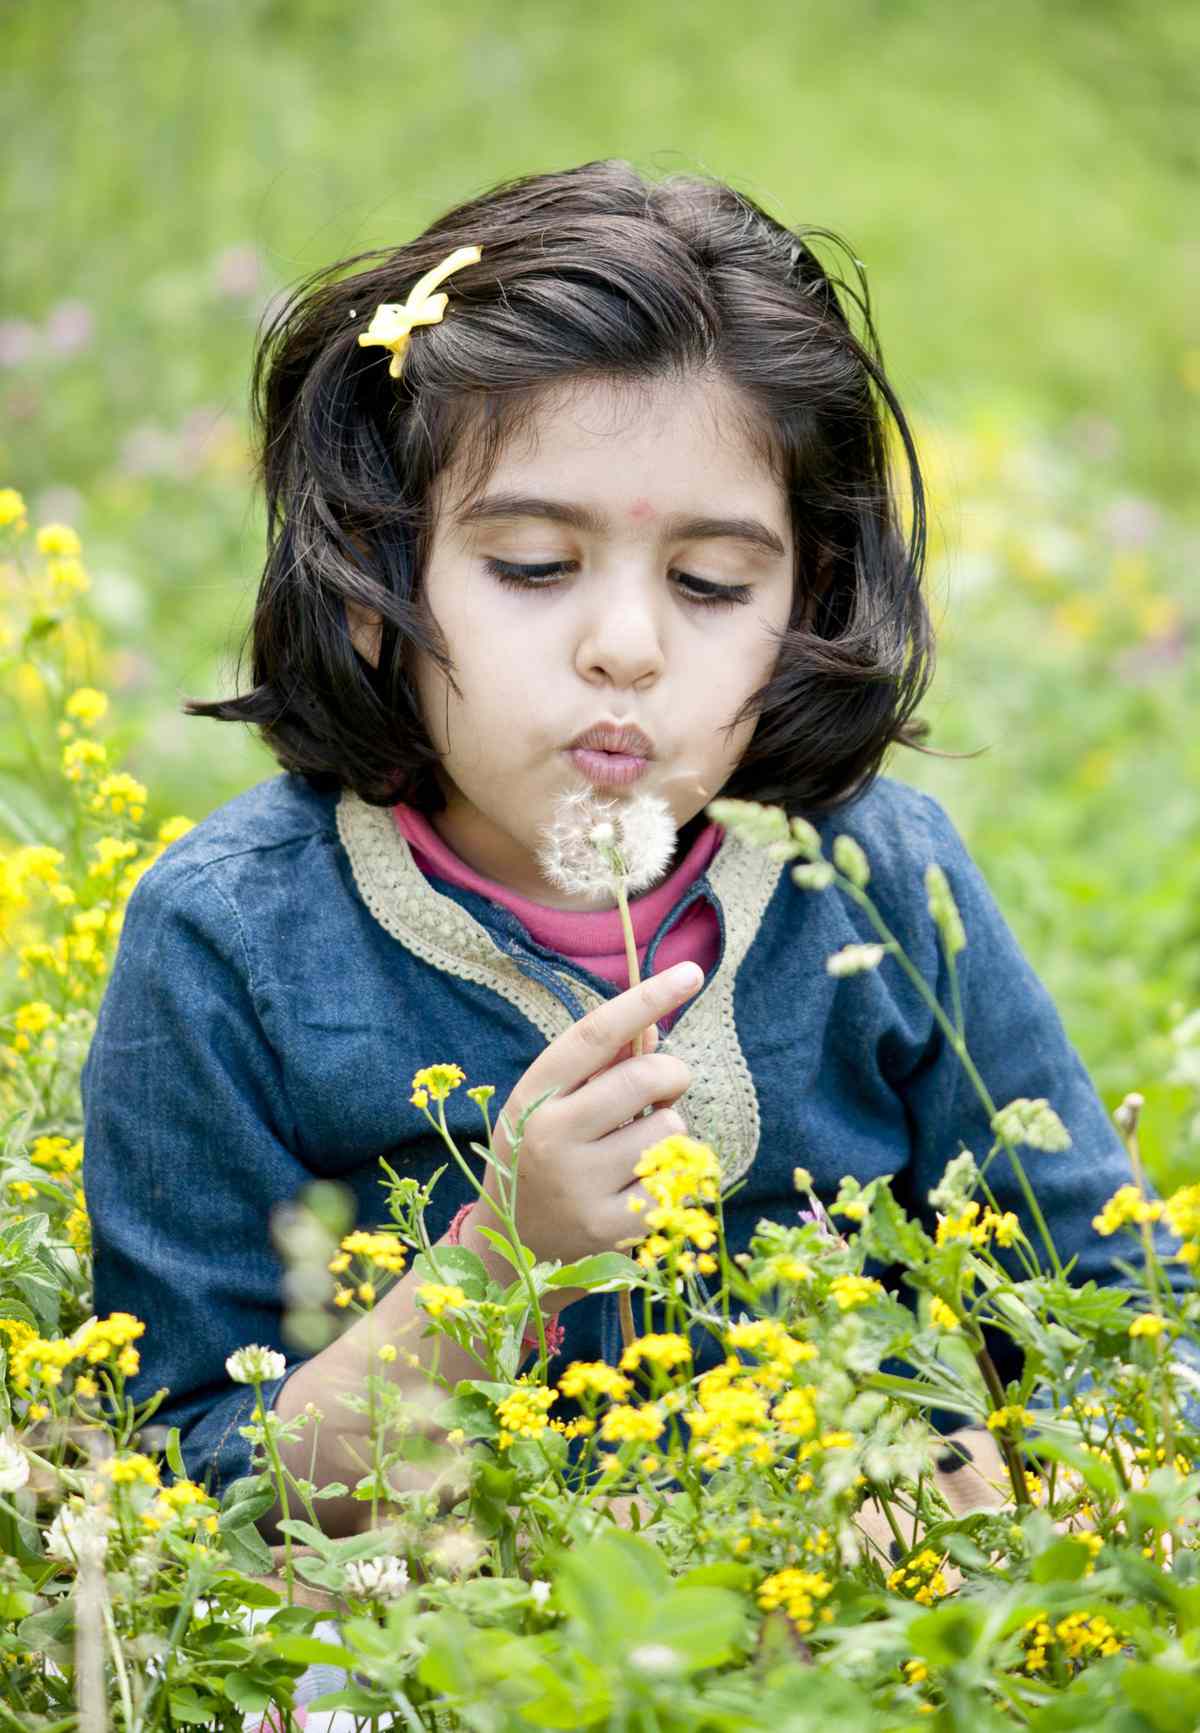 Girl blowing away dandelions.